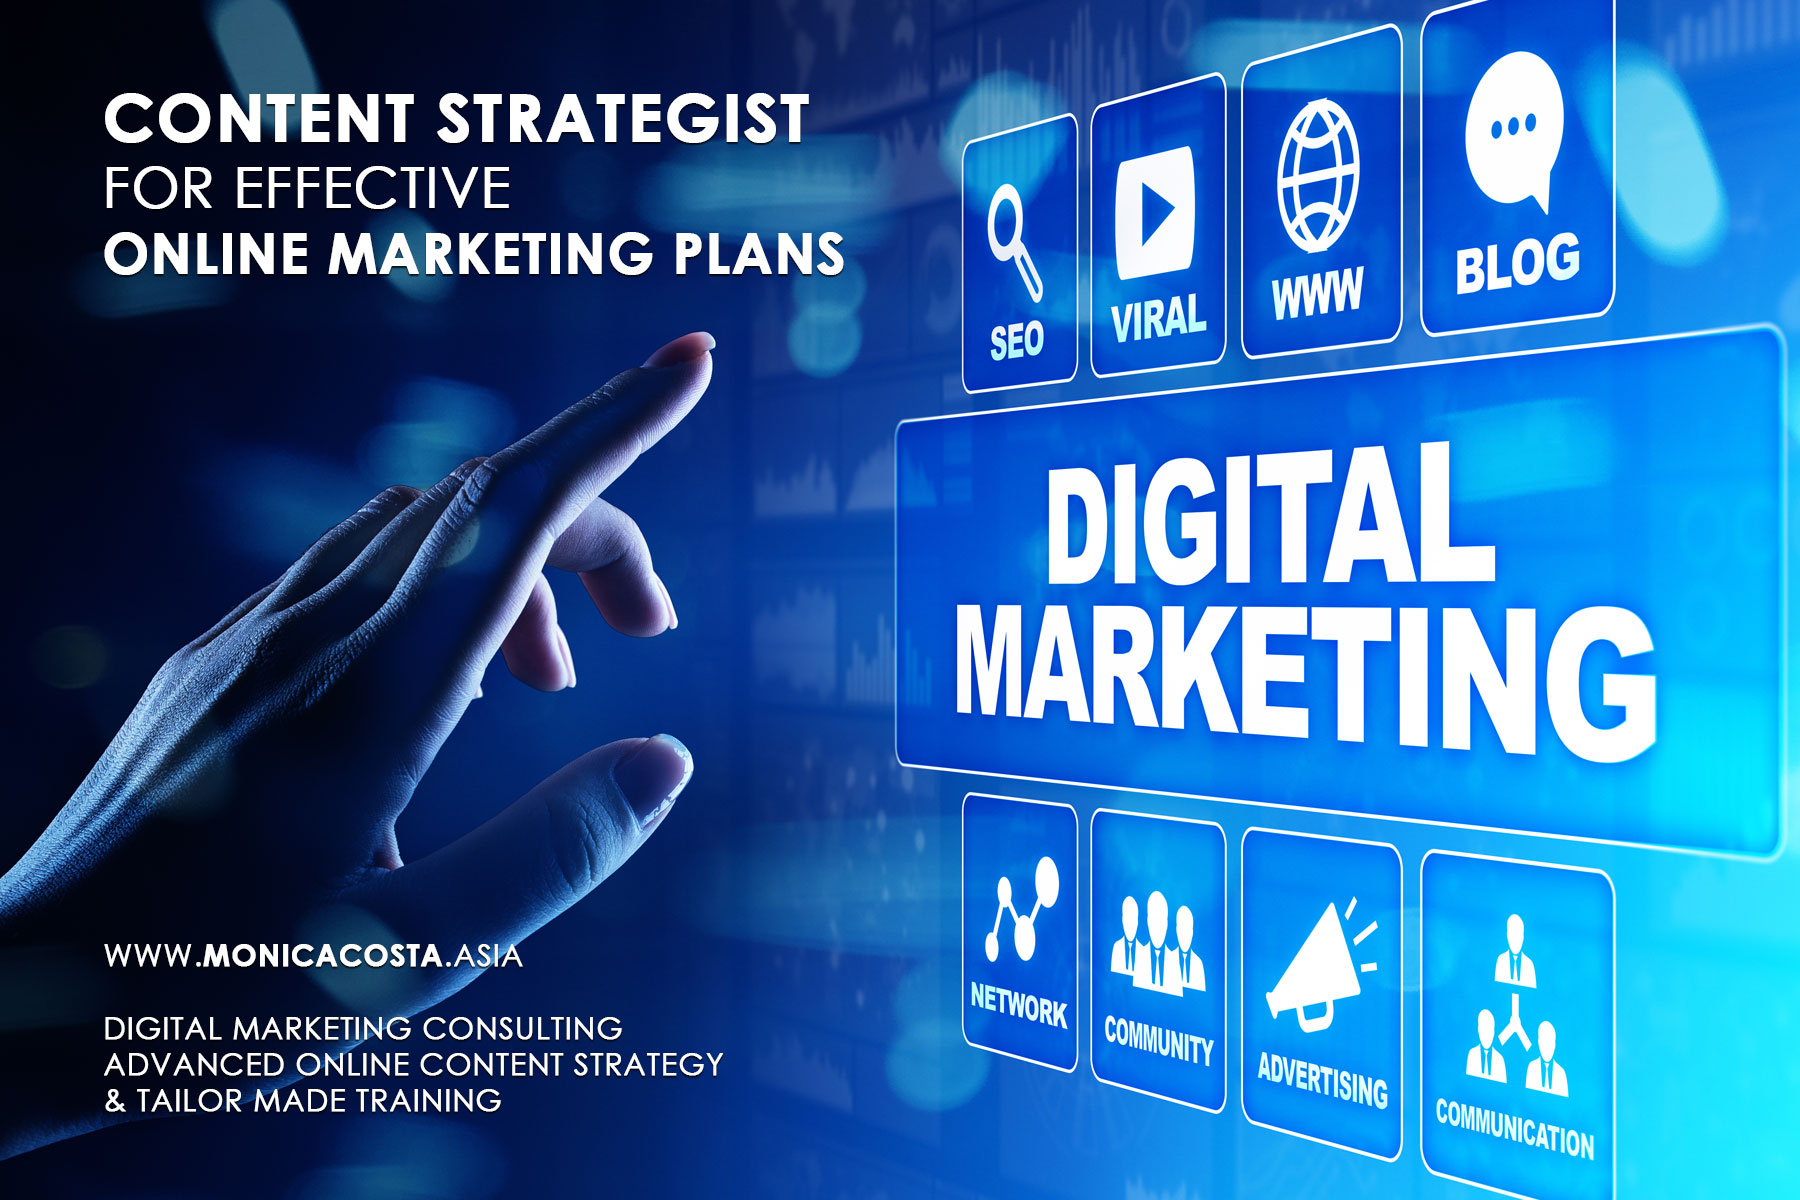 Digital Marketing Consulting - Digital Marketing Training